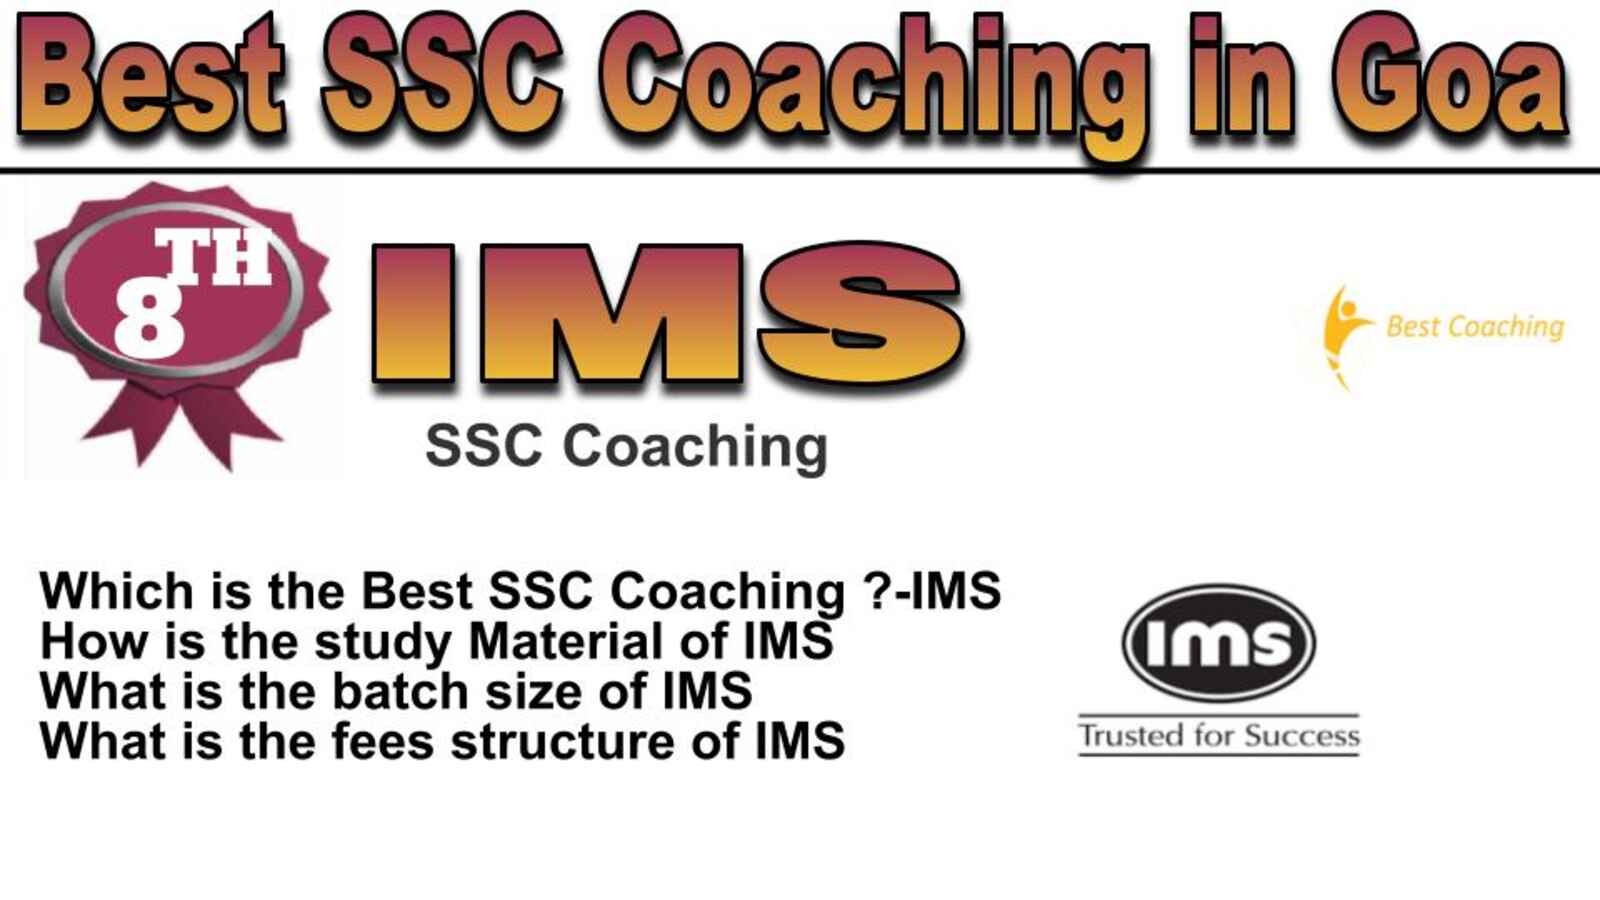 Rank 8 best SSC coaching in Goa